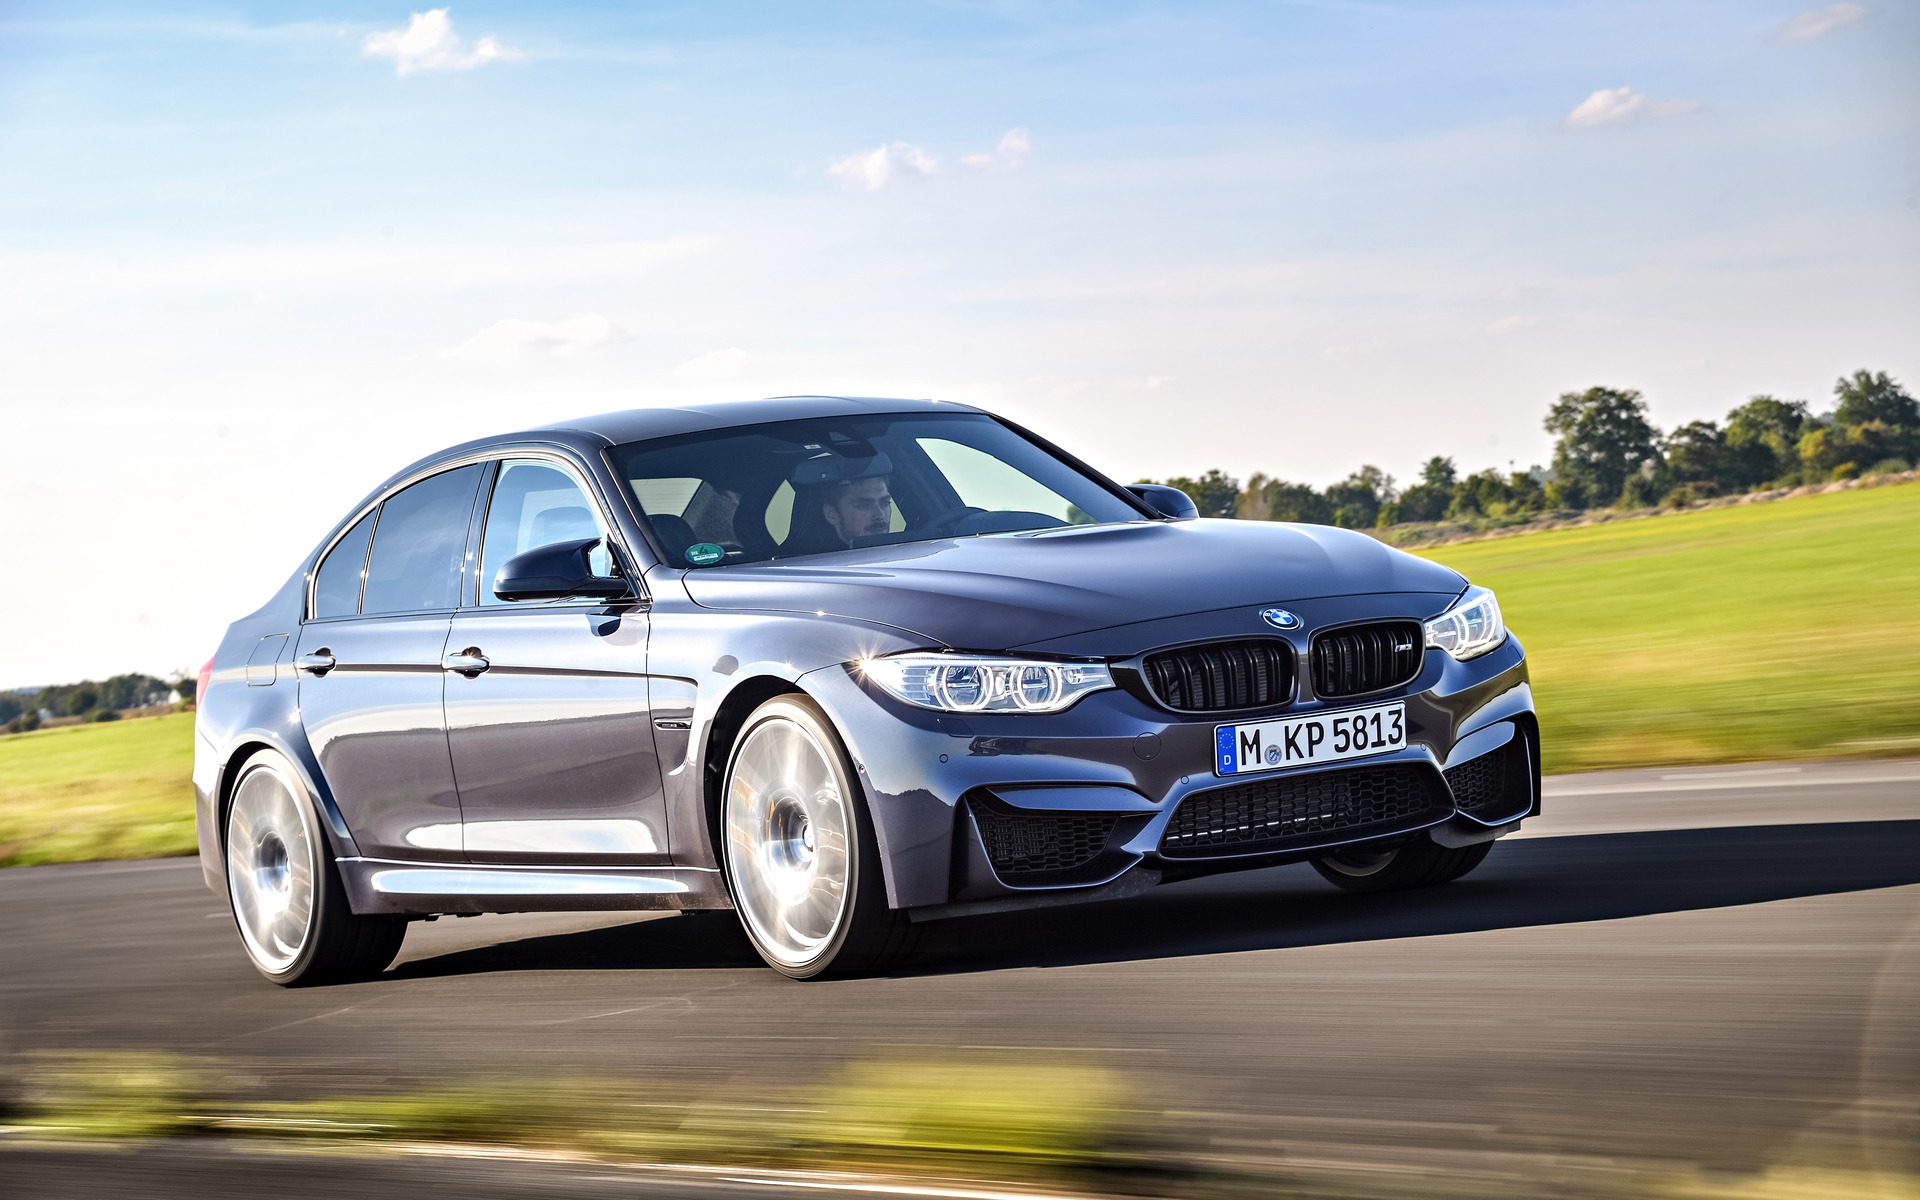 2014 BMW F80 M3: Turbocharging takes centre stage making massive power. 